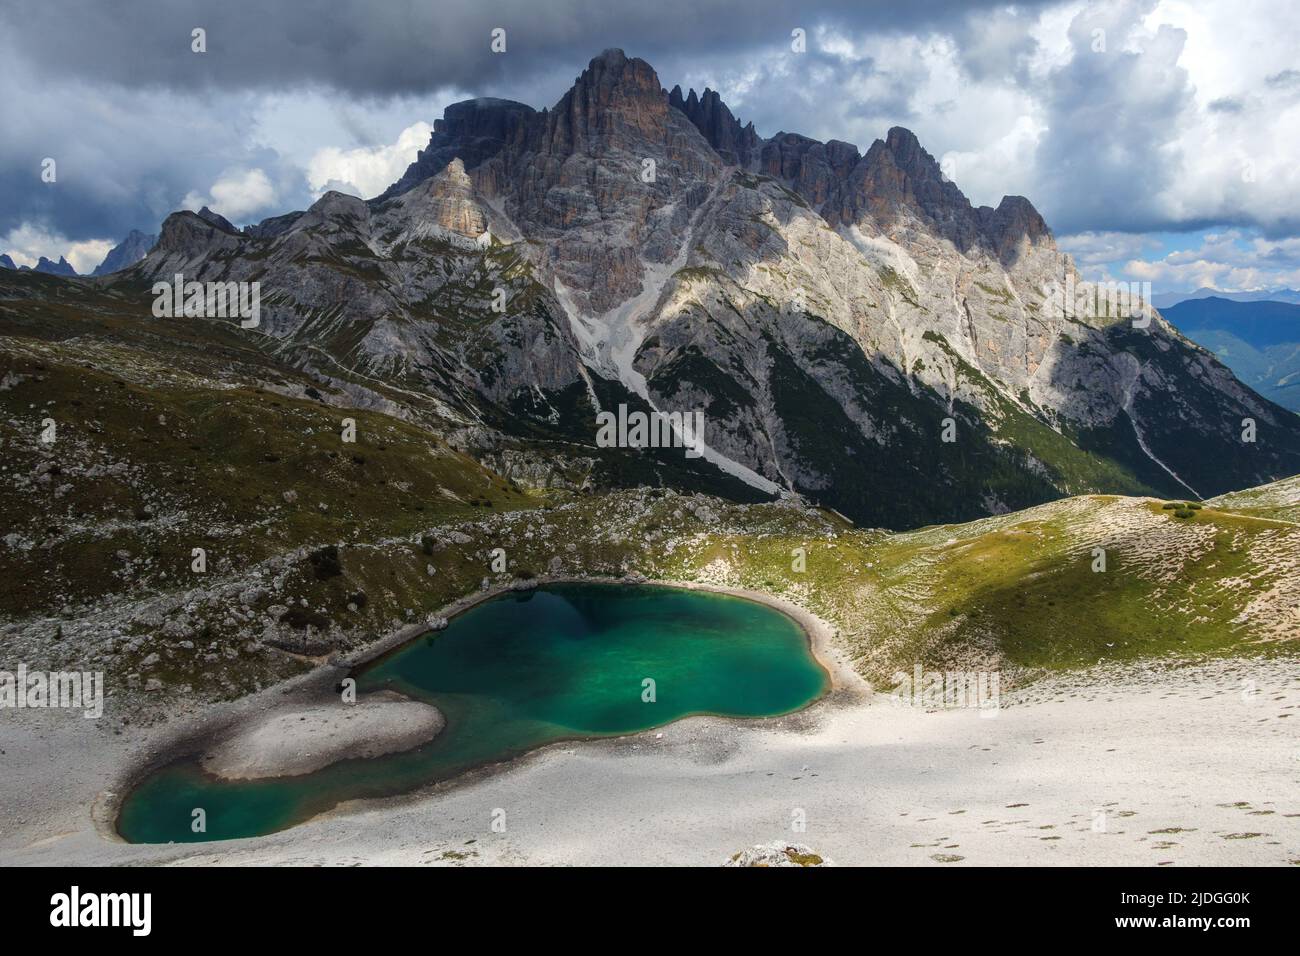 Piani plateau (Alpe dei Piani). Alpine lake. Punta dei Tre Scarperi mountain peaks. The Sexten Dolomites. Italian Alps. Europe. Stock Photo